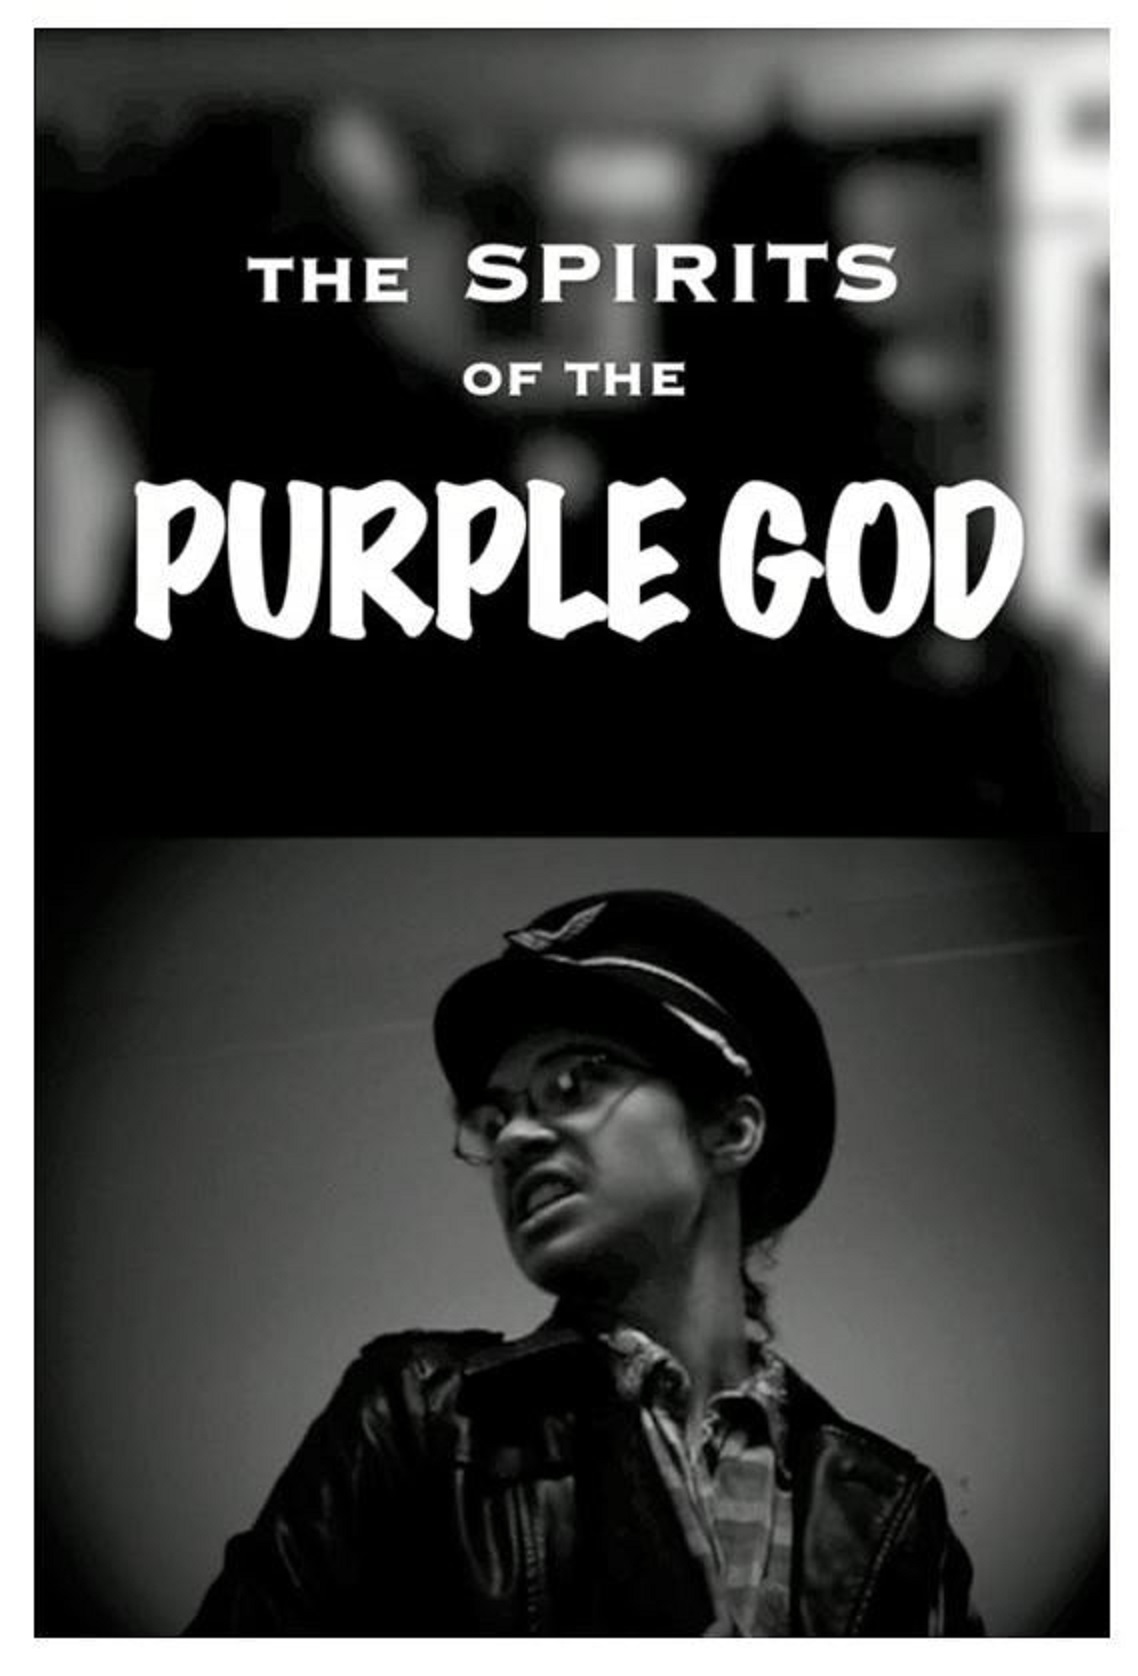 The Spirits of the Purple God